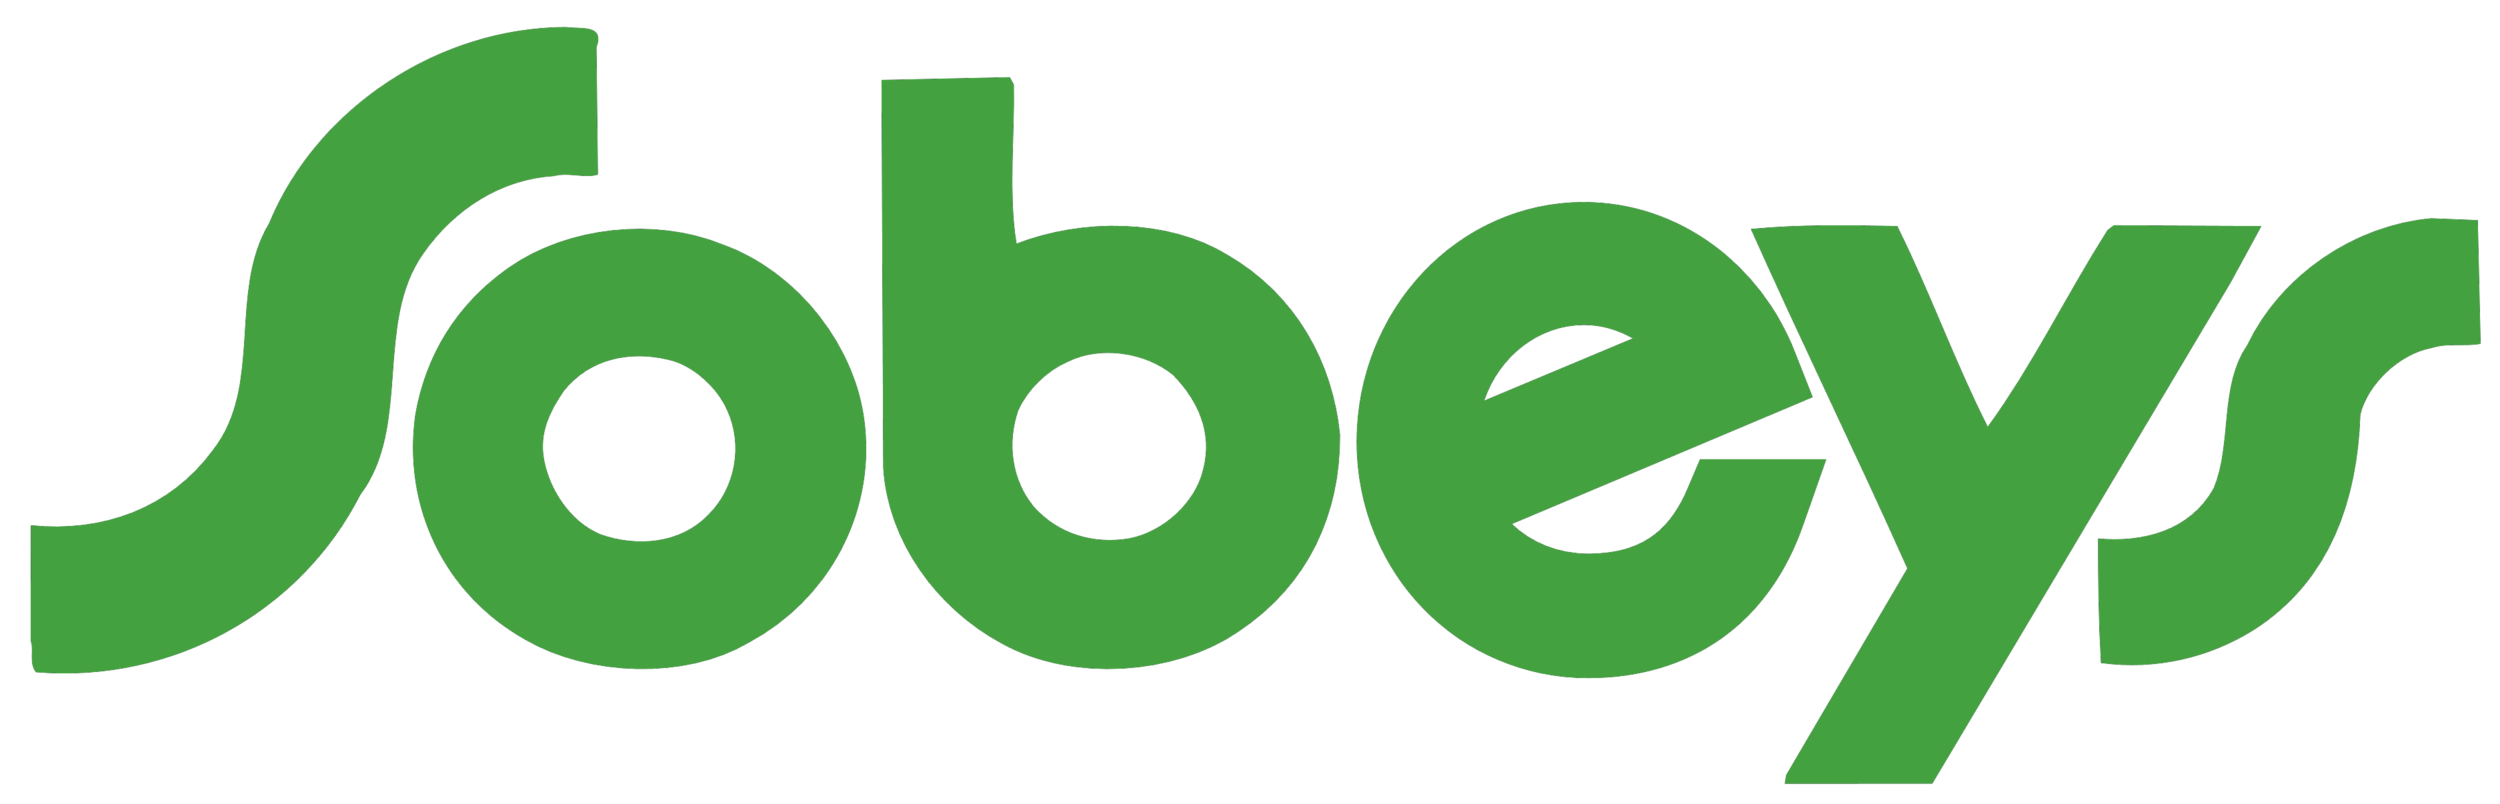 Sobeys_logo.png